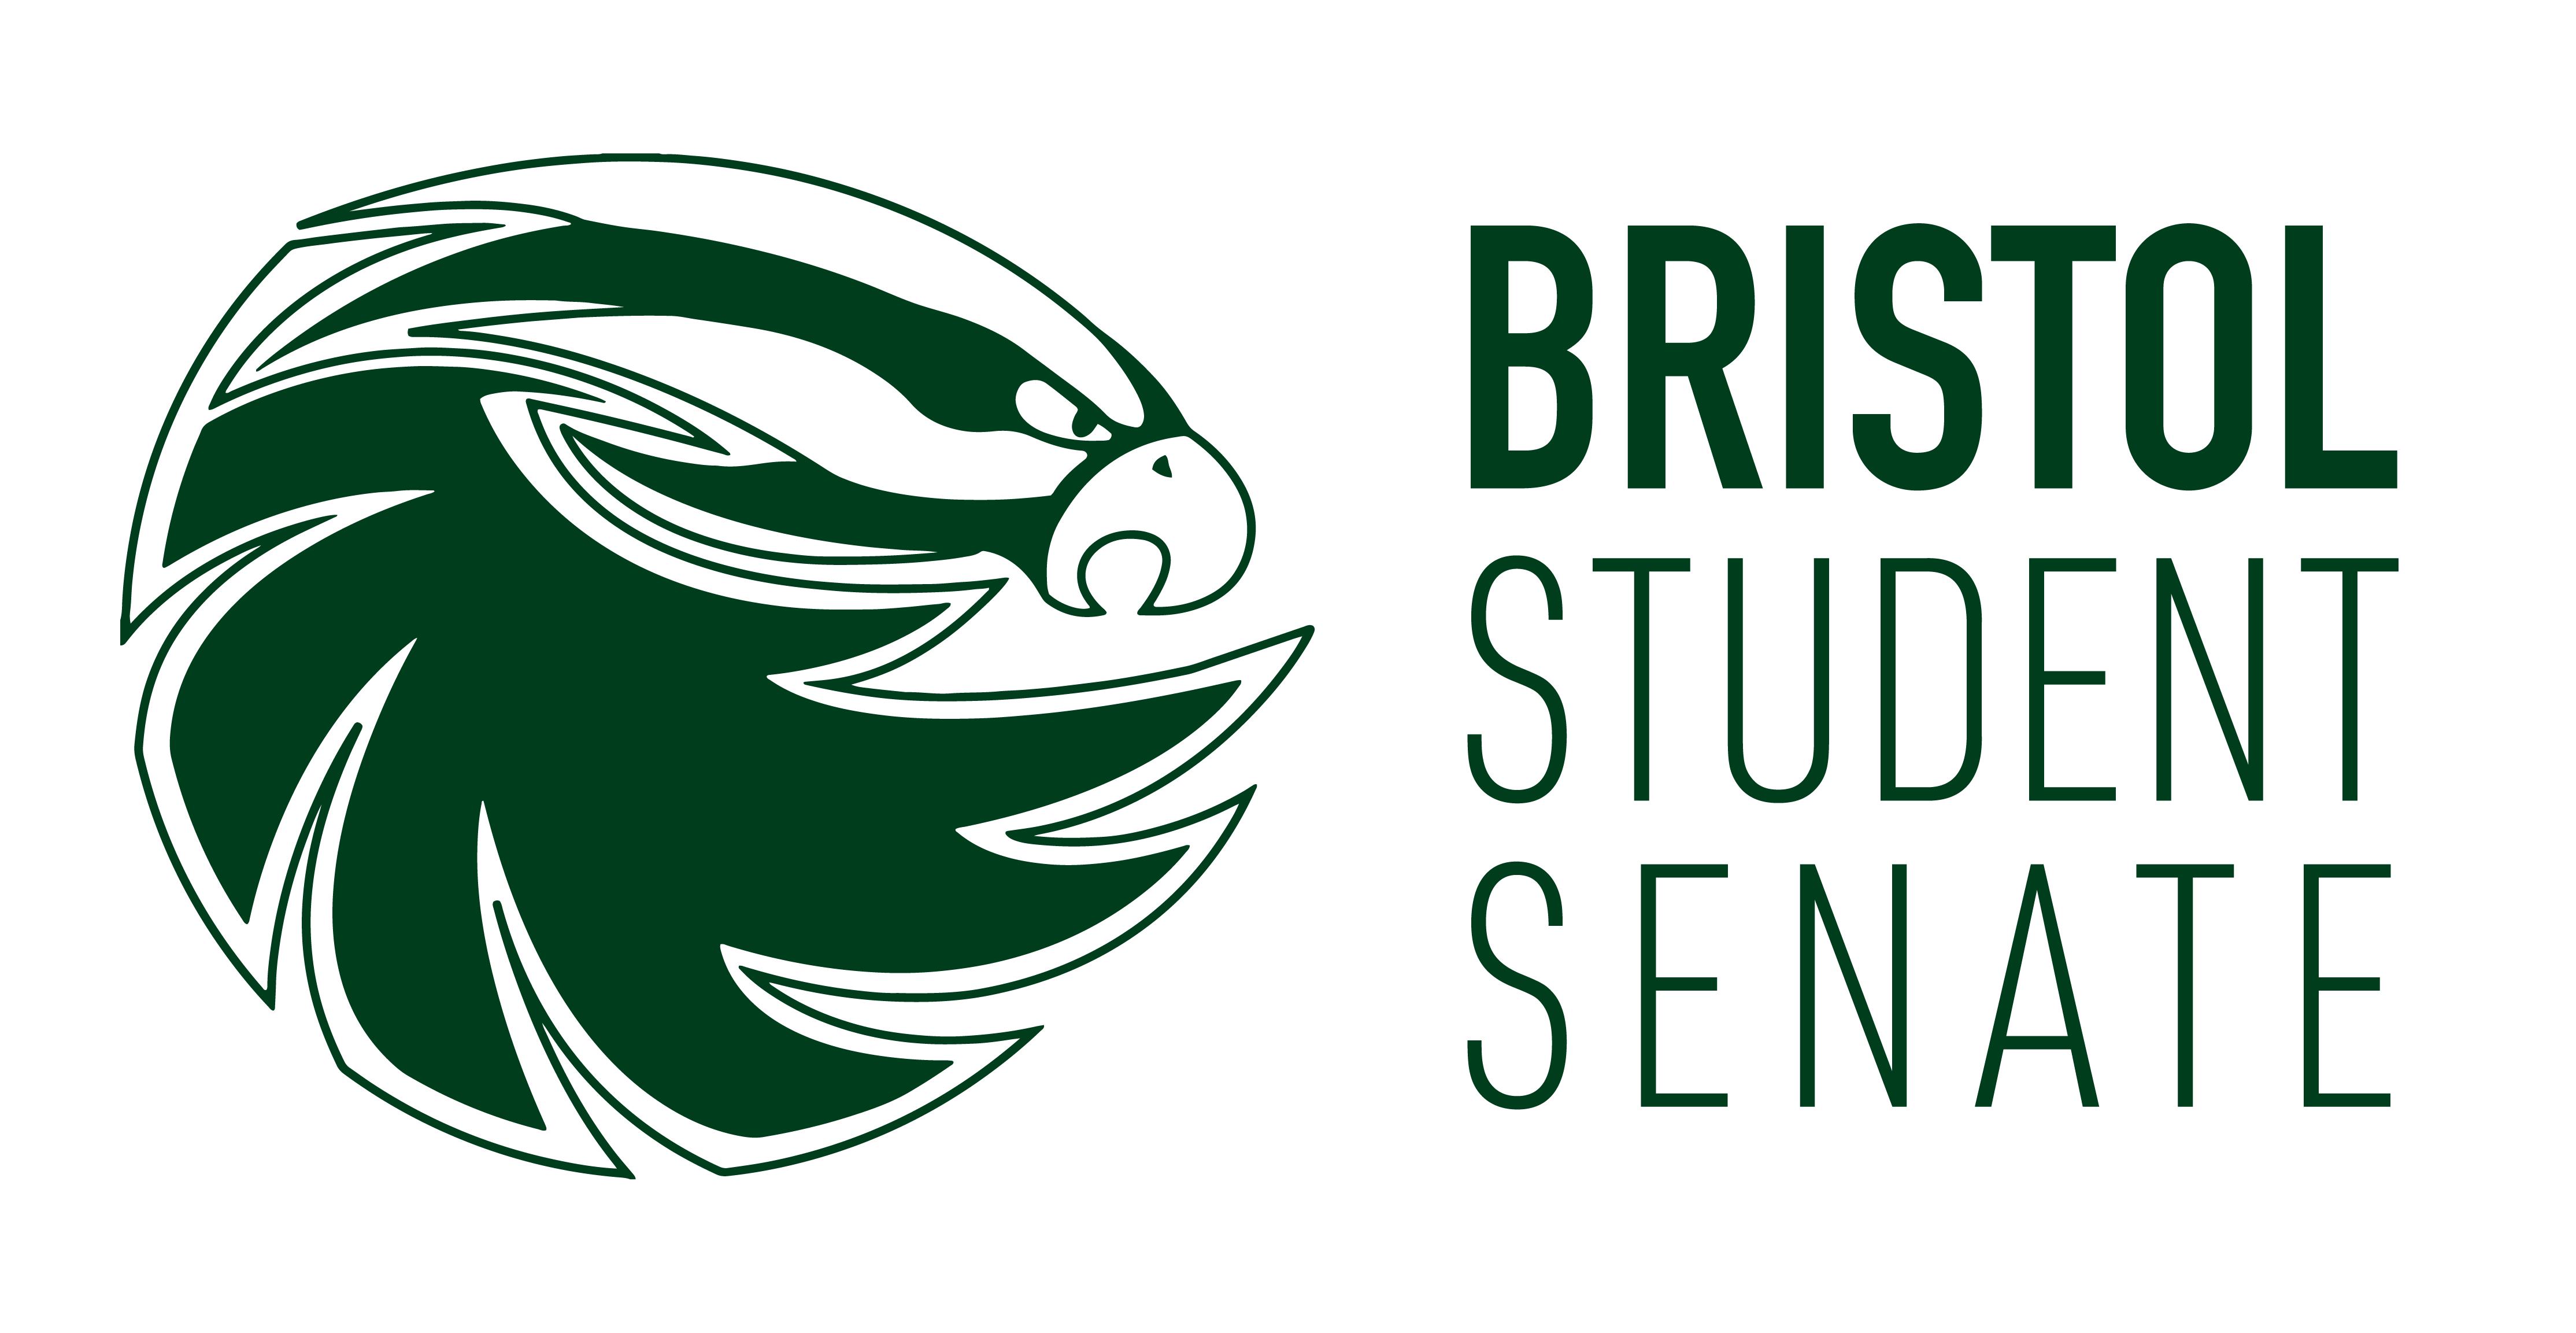 Bristol-green student senate logo